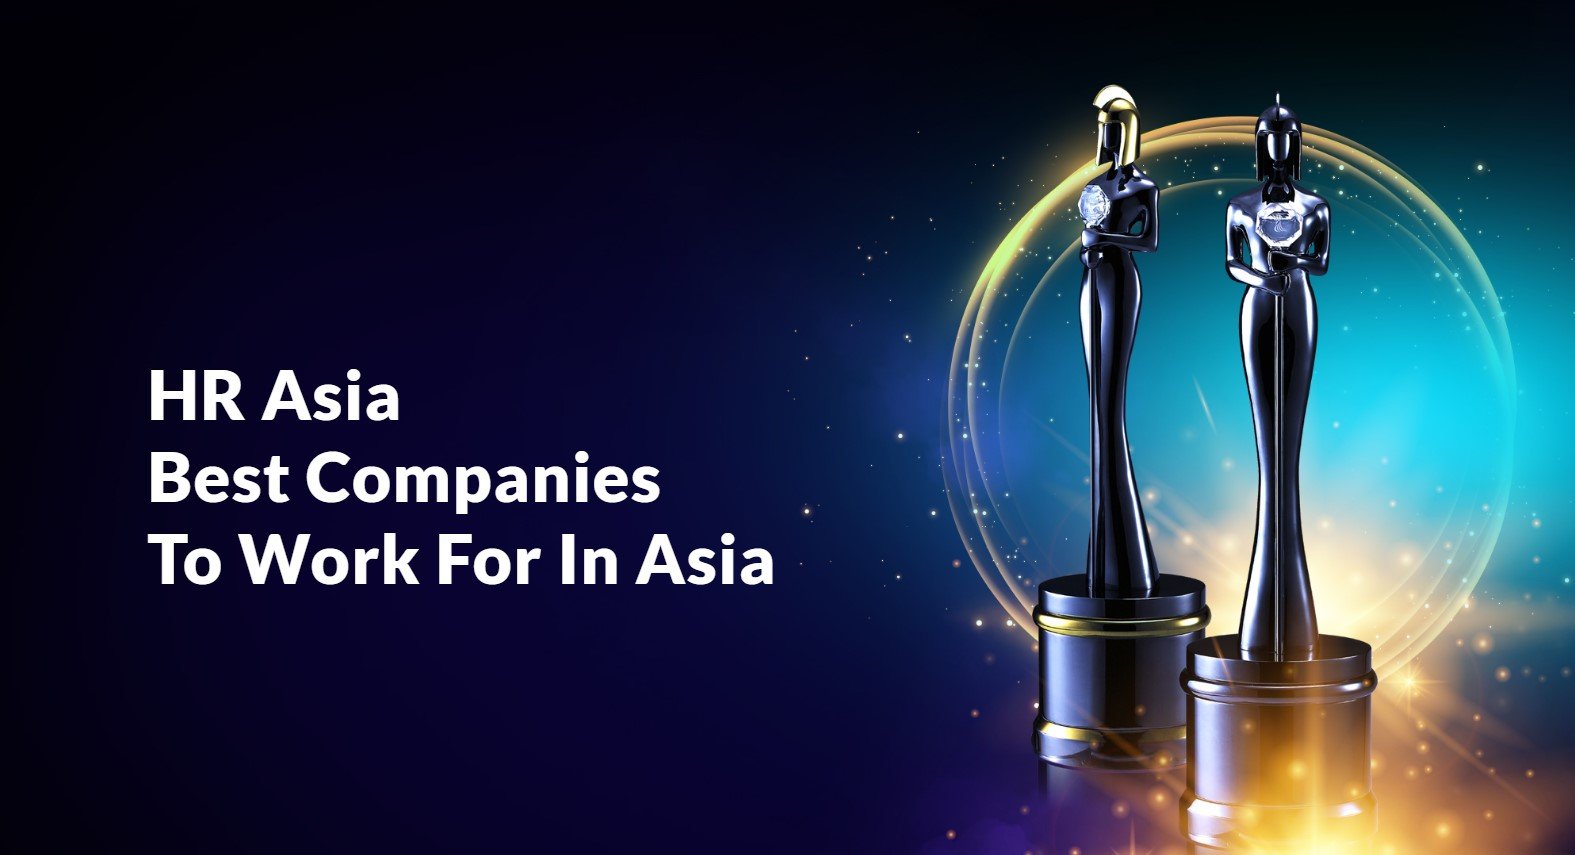 EVERLIGHT Electronics won the 2021 HR Asia Awards